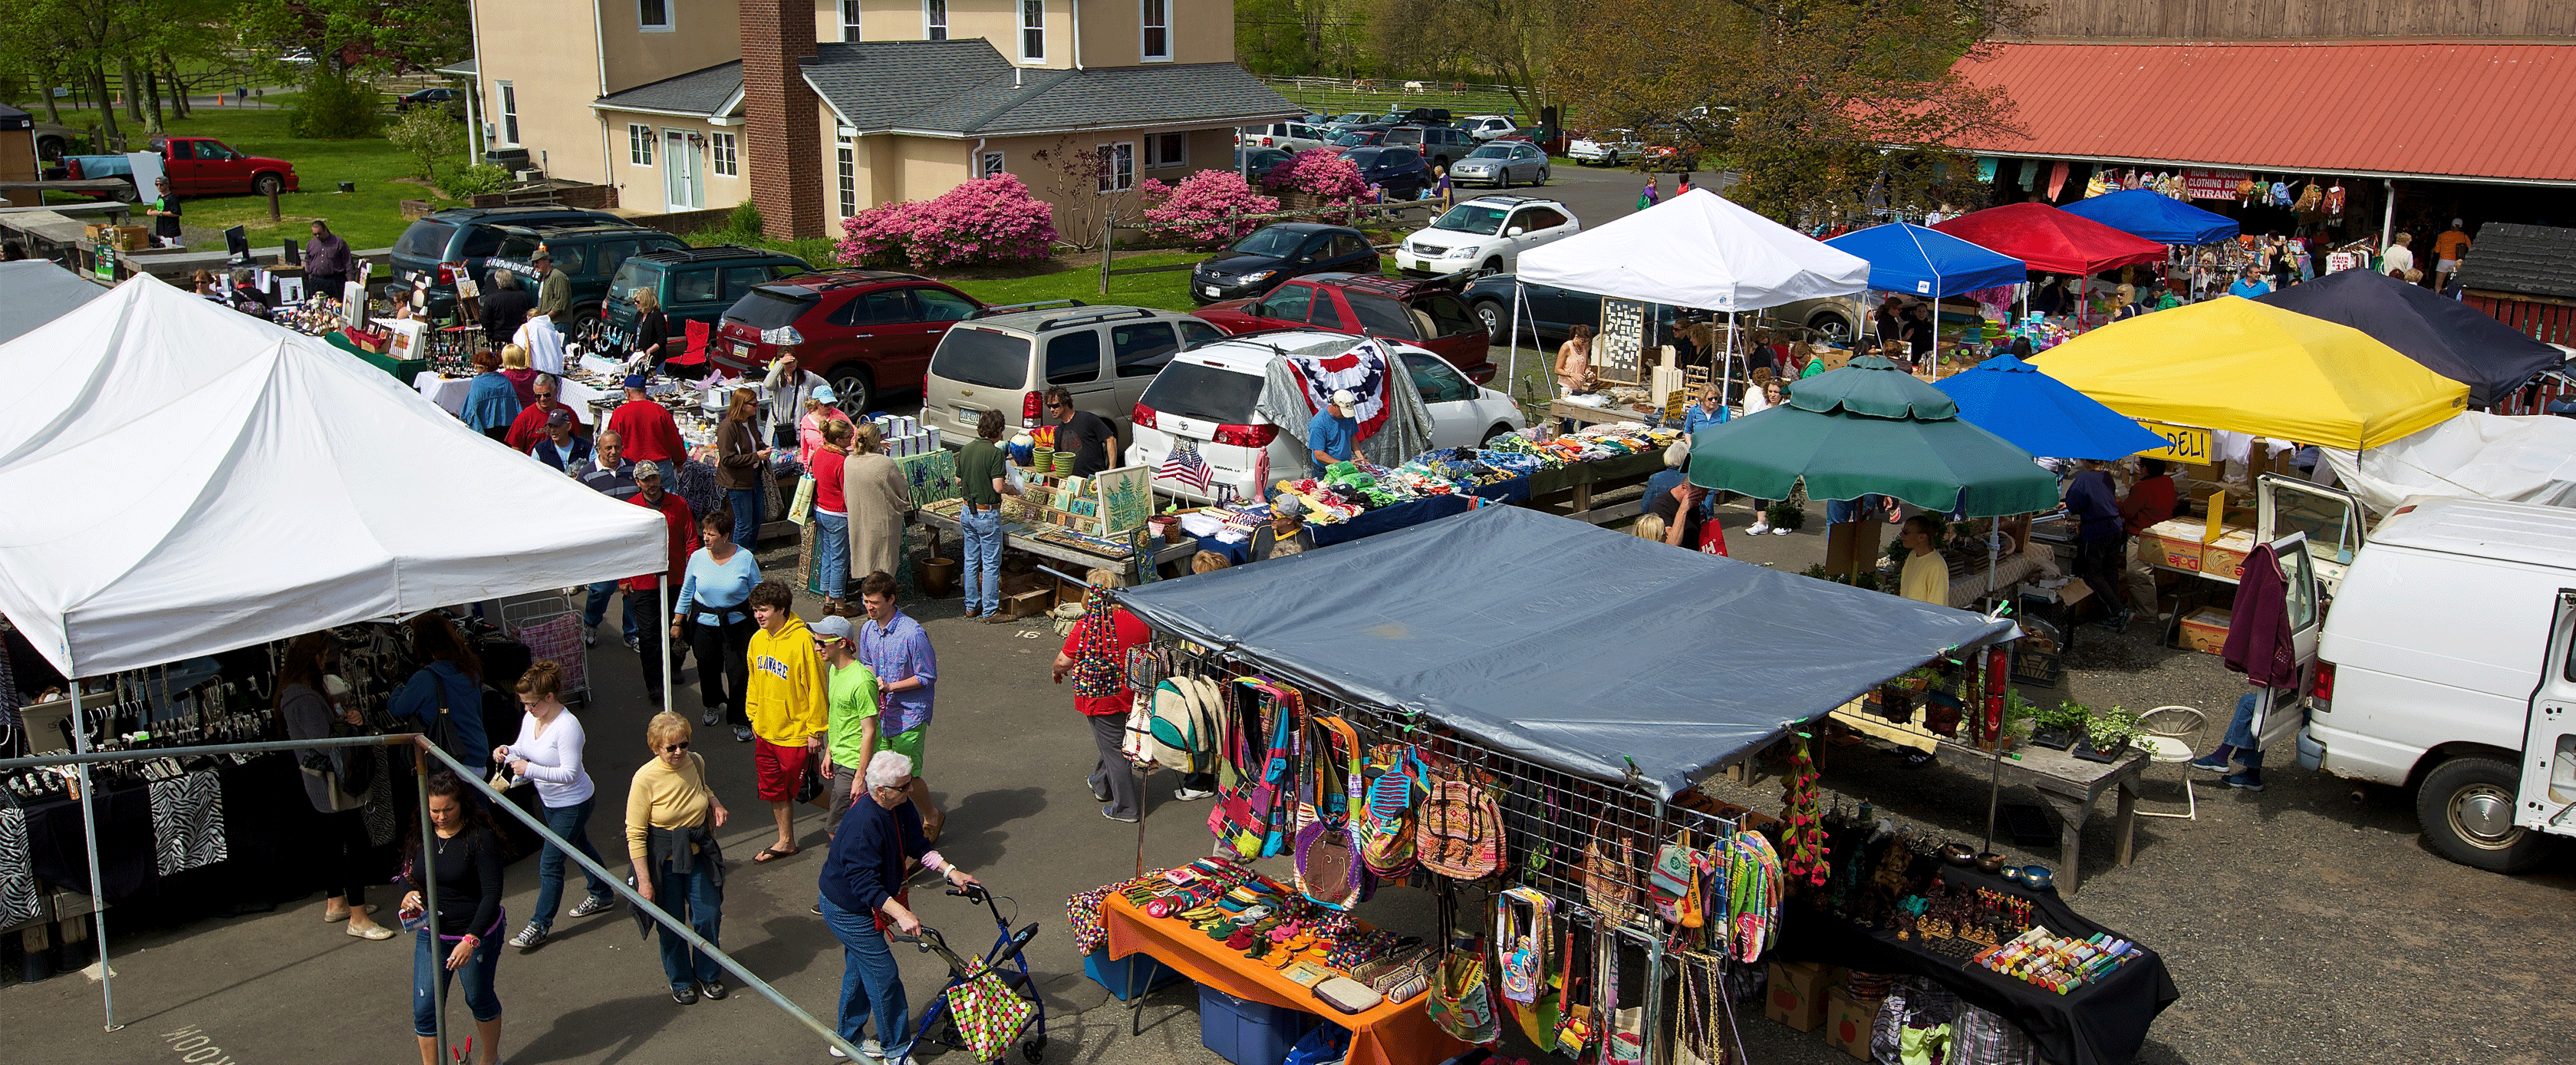 Flea market photo